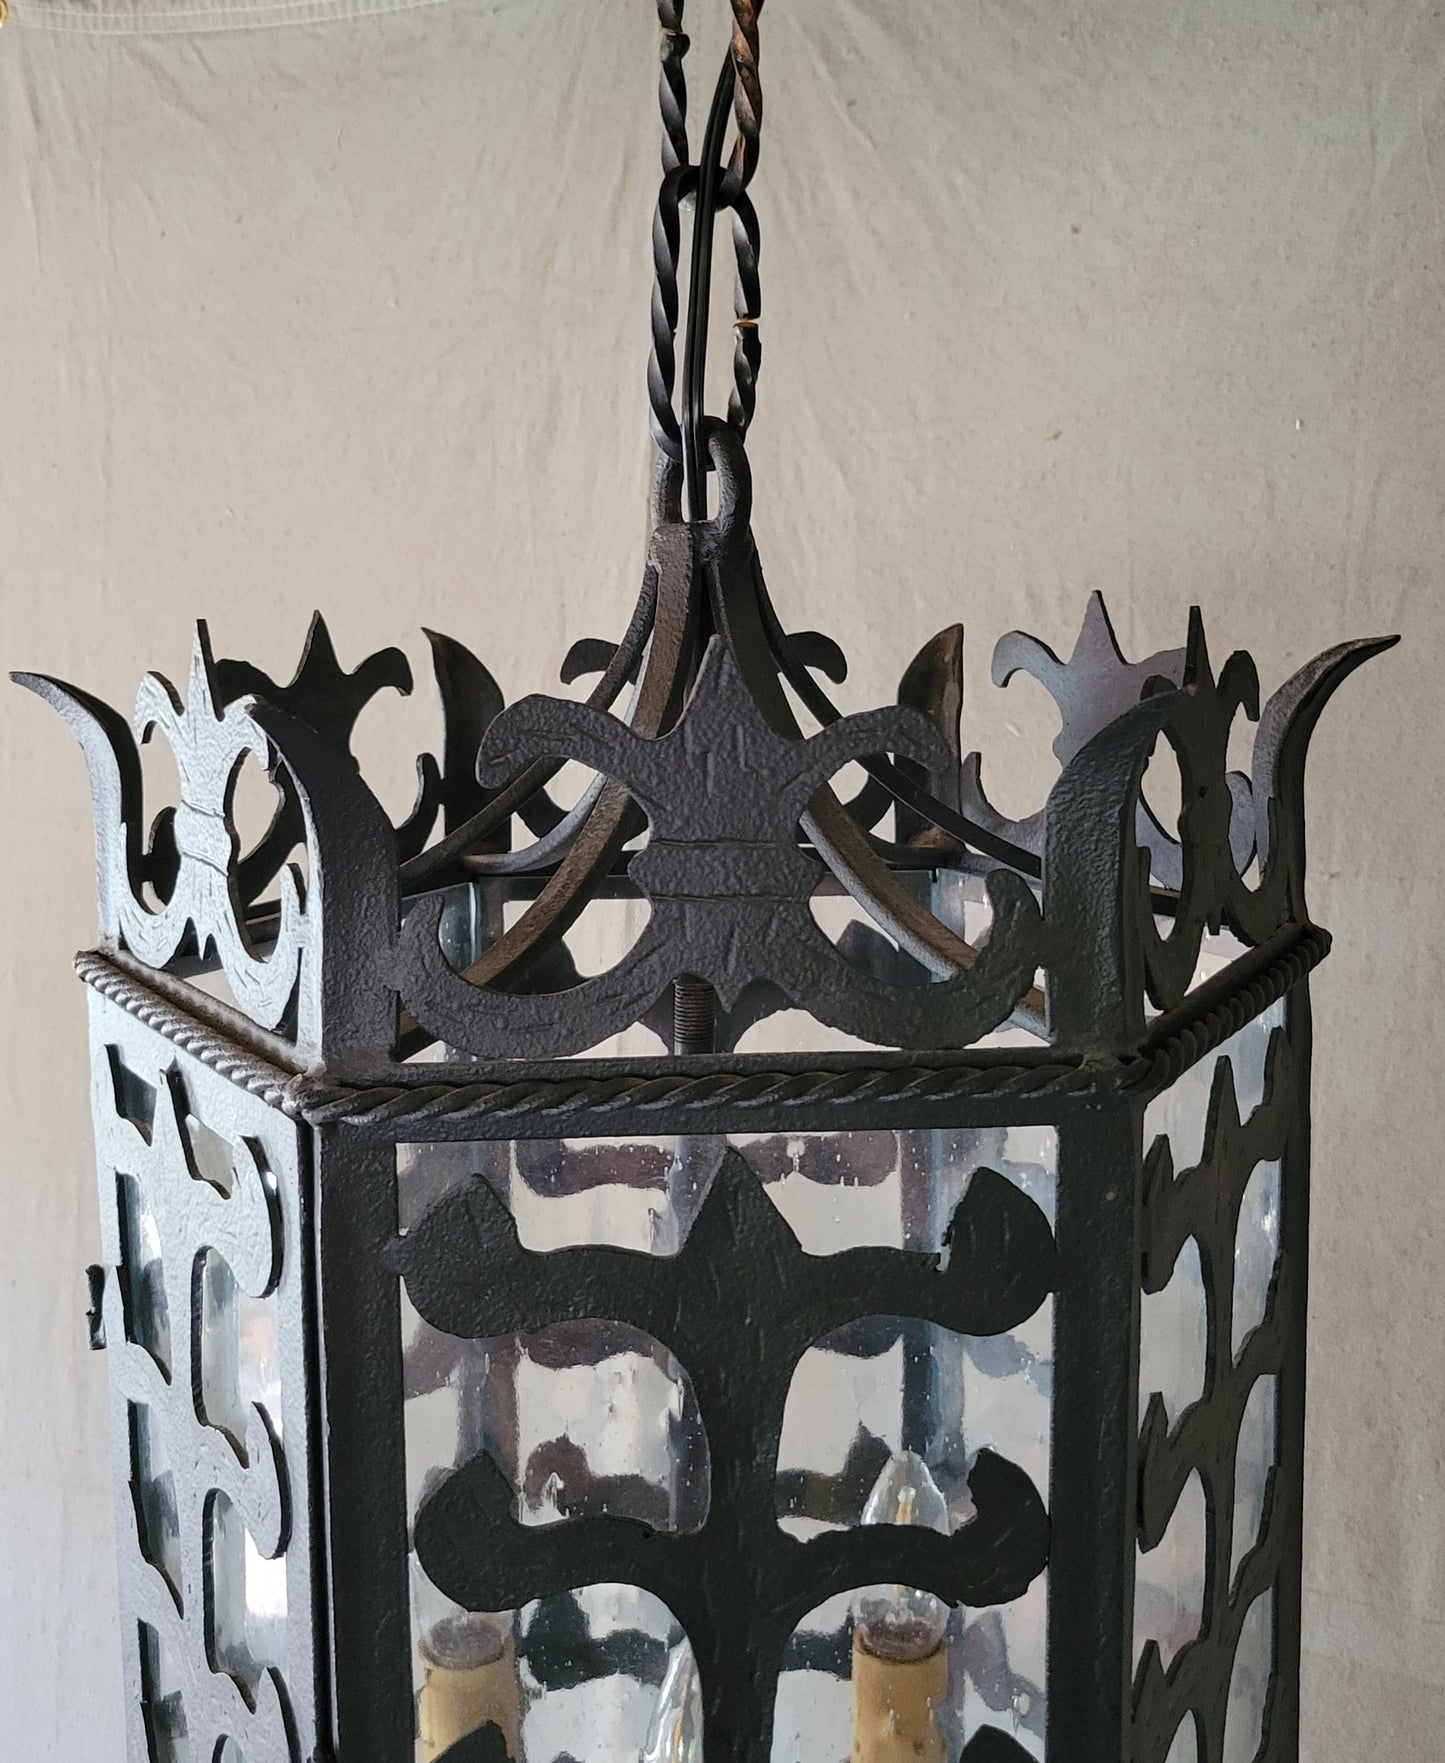 Vintage Custom Hexagonal Iron & Glass Pendant Lantern - 10 Available